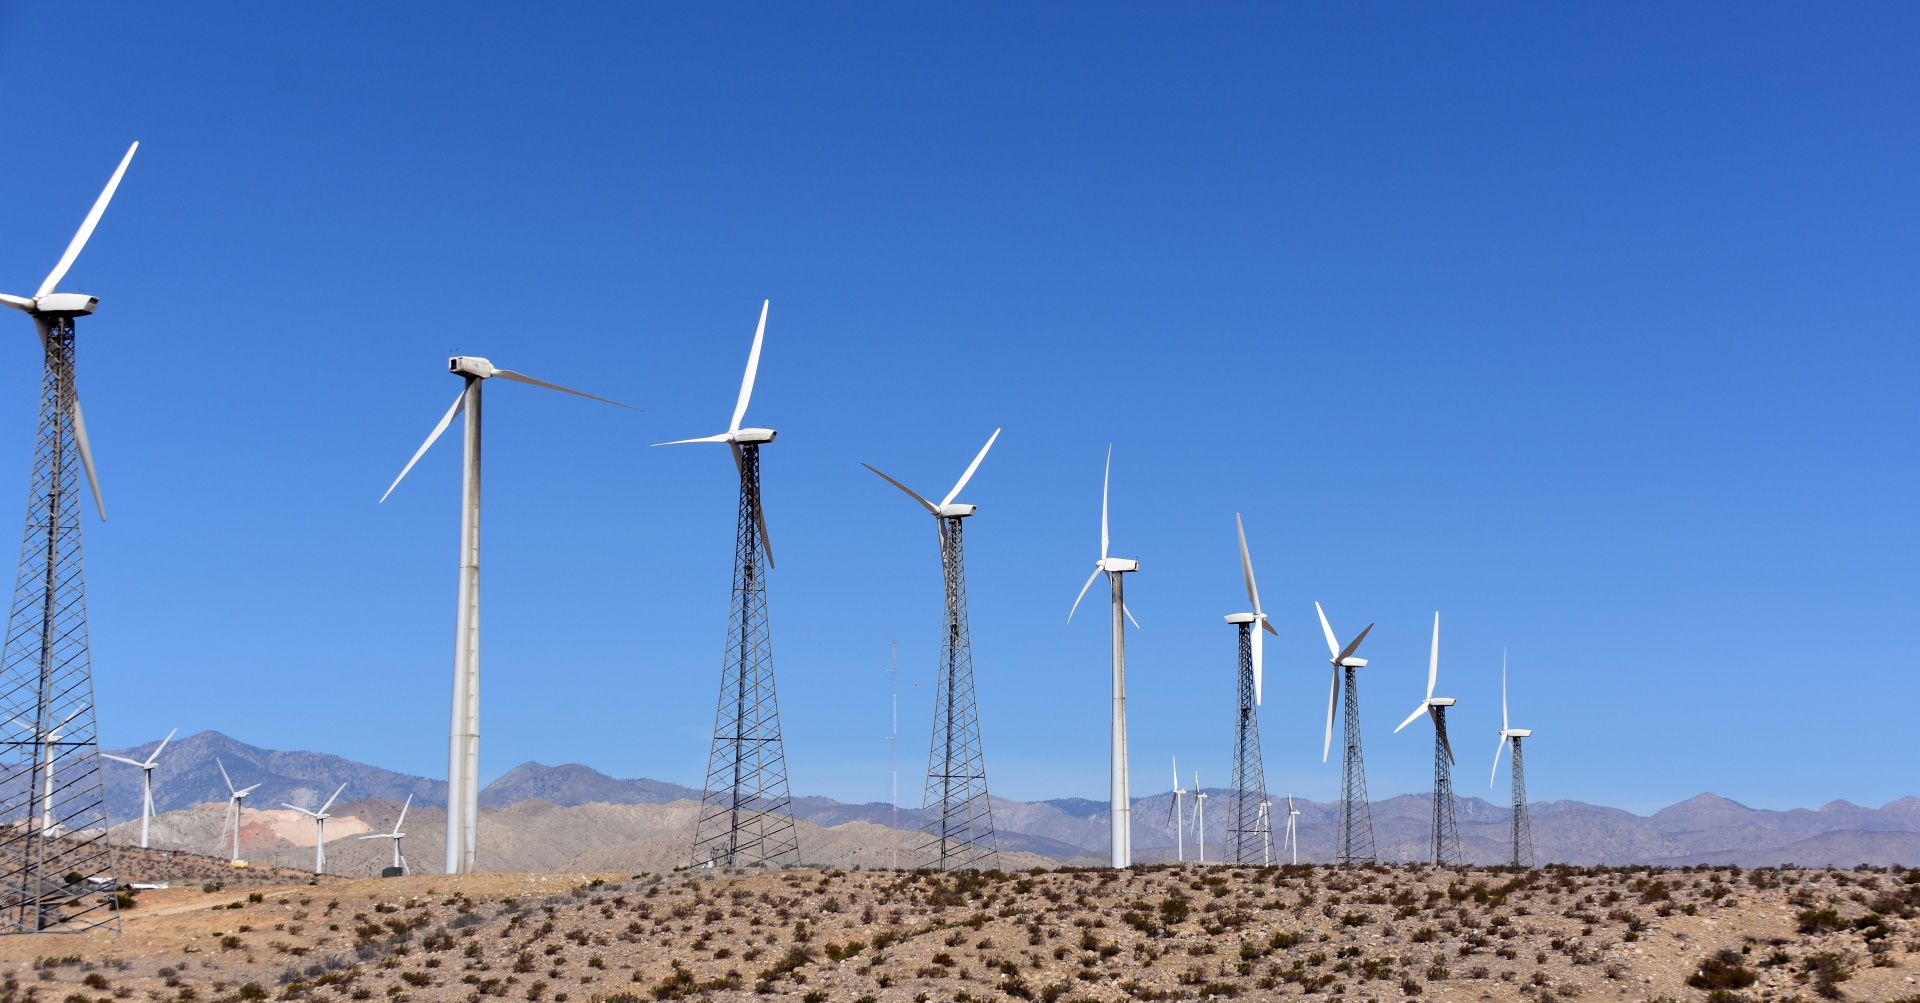 mega tower wind turbines in the desert